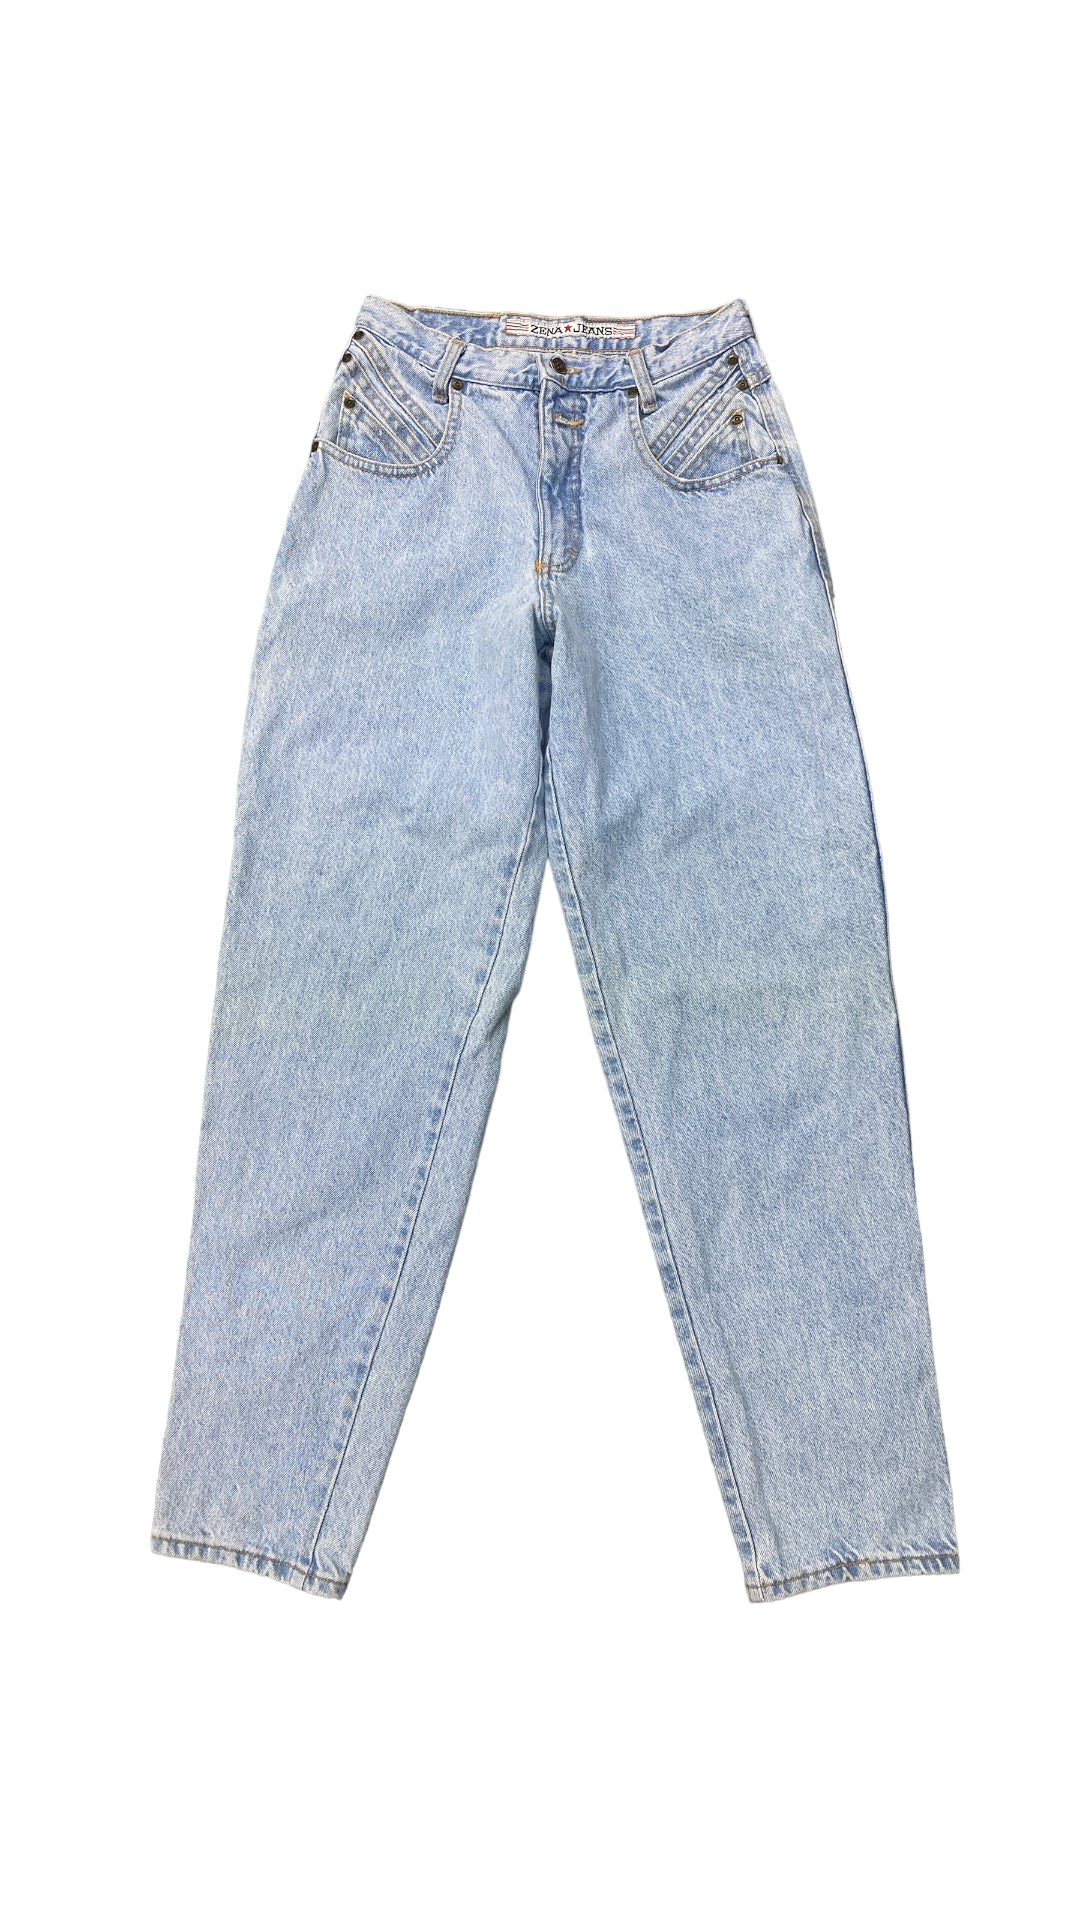 Load image into Gallery viewer, VTG Zena Light Wash Denim Jeans Sz 26x30
